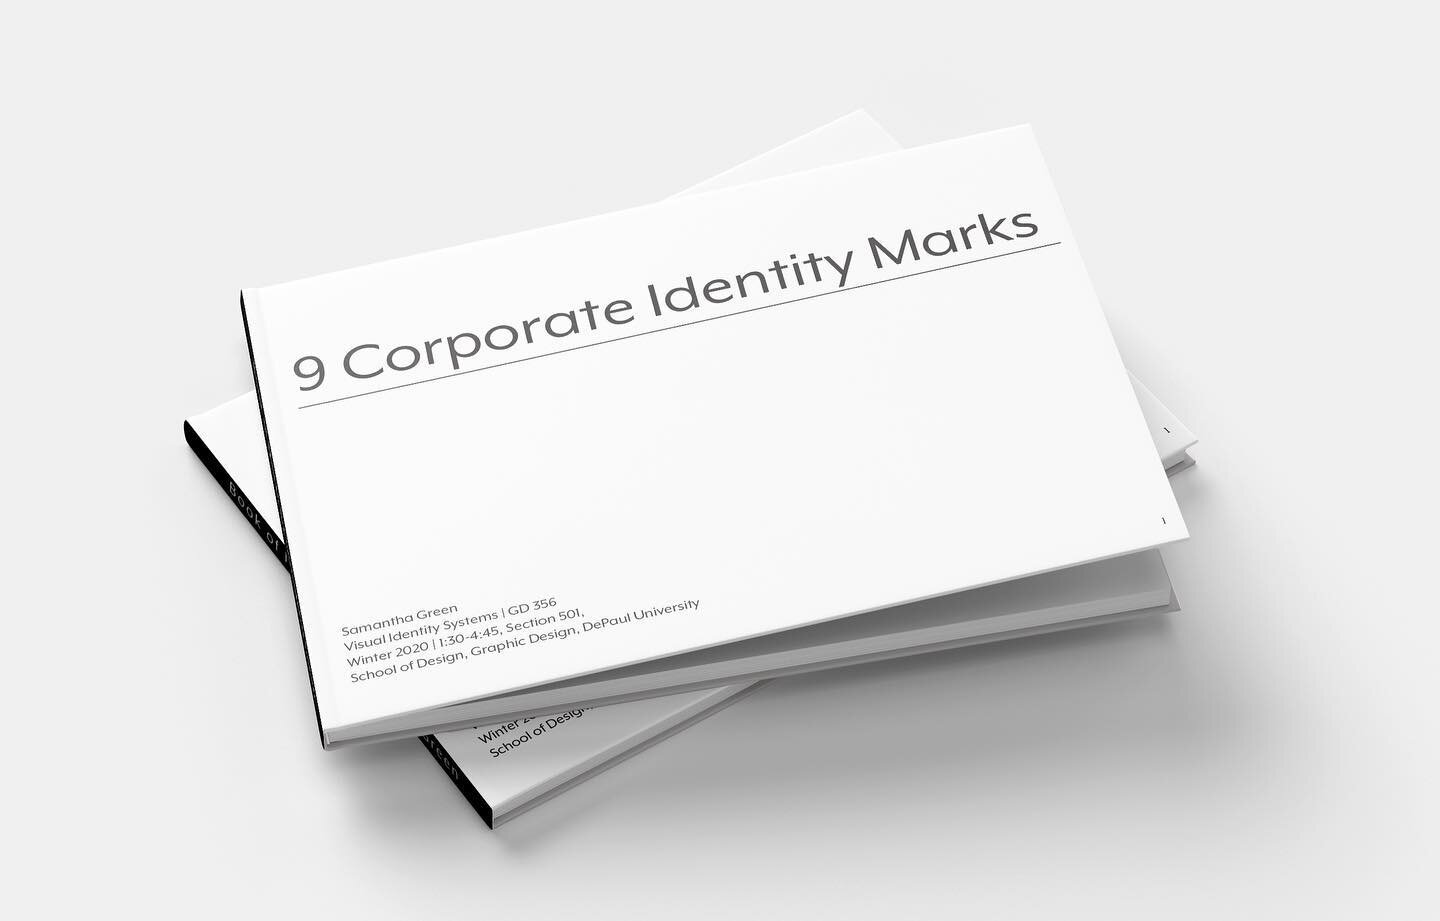 nine corporate identity marks